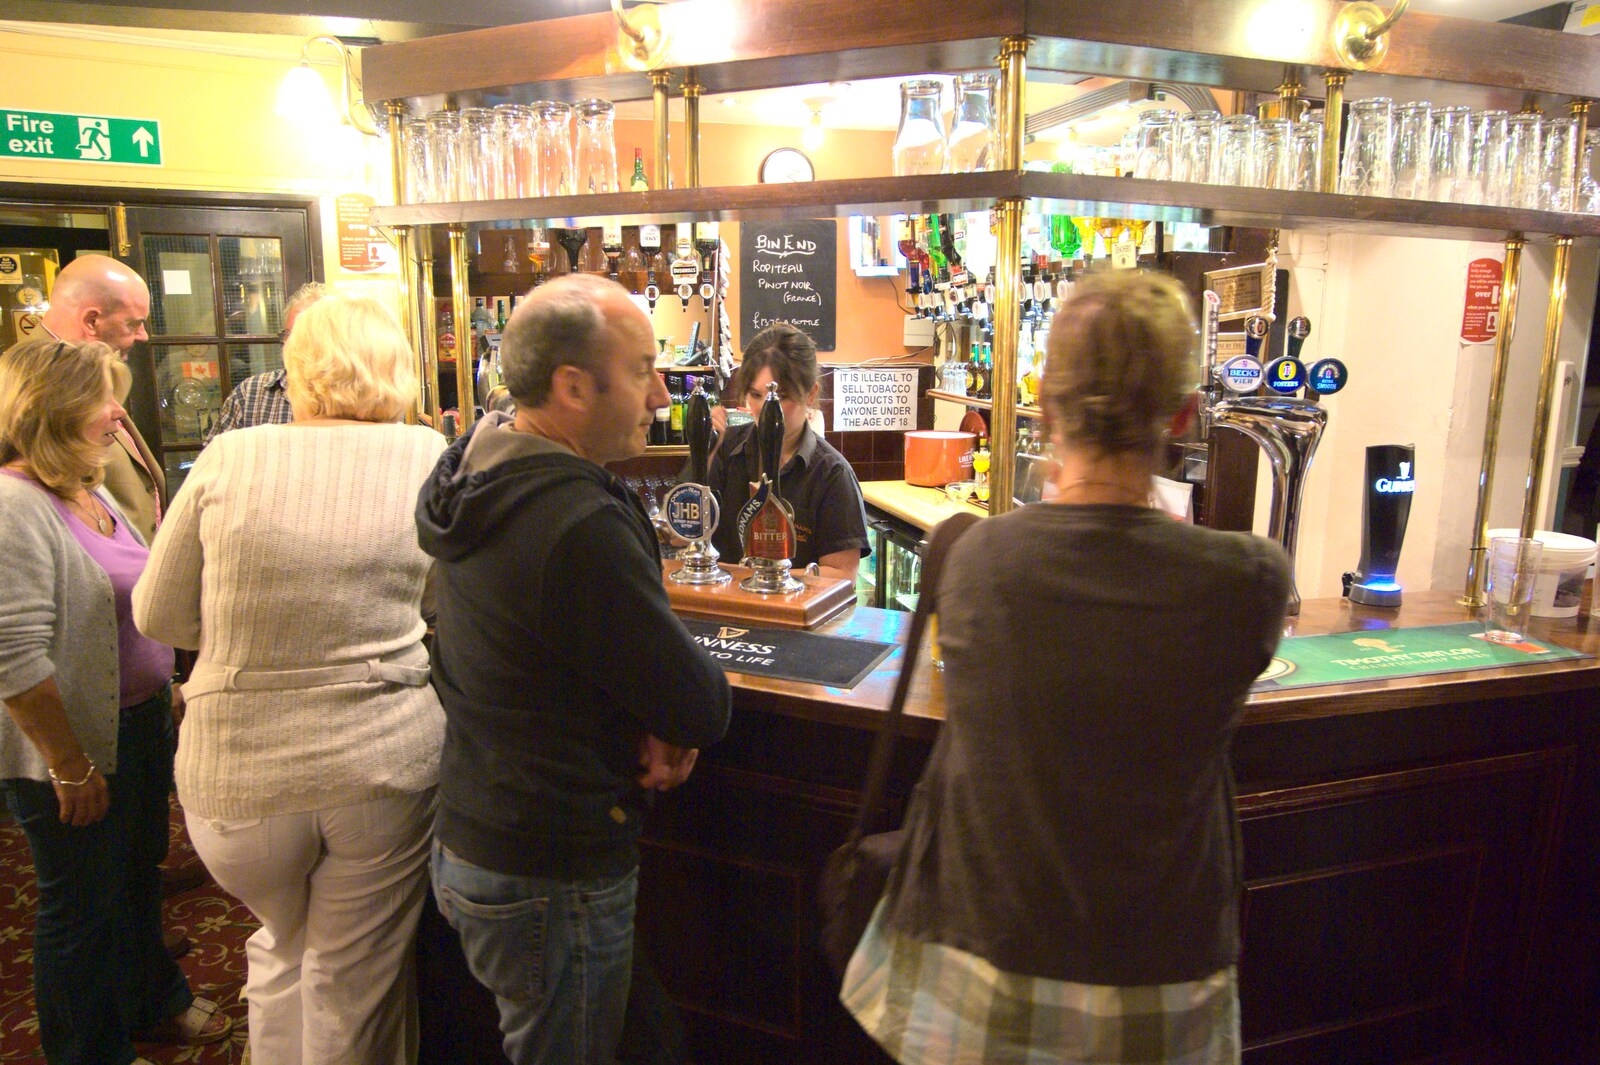 DH and Suey at the bar from The BSCC Weekend at Rutland Water, Empingham, Rutland - 14th May 2011